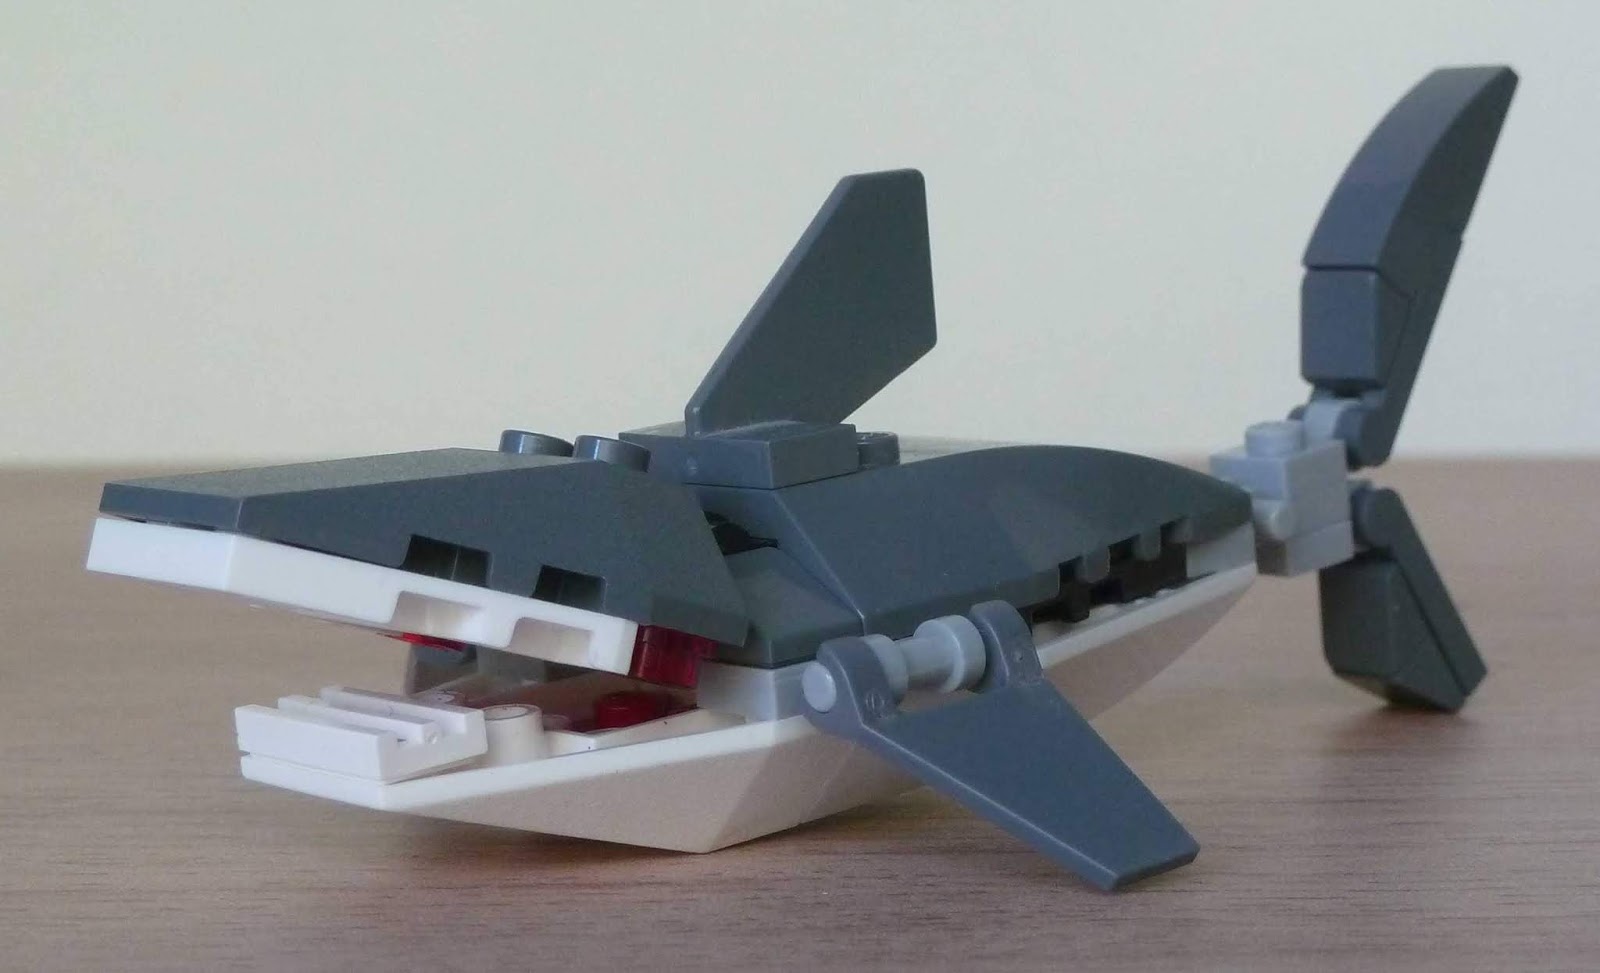 FREE LEGO Airplane Mini Model Build at LEGO Stores - Free Samples